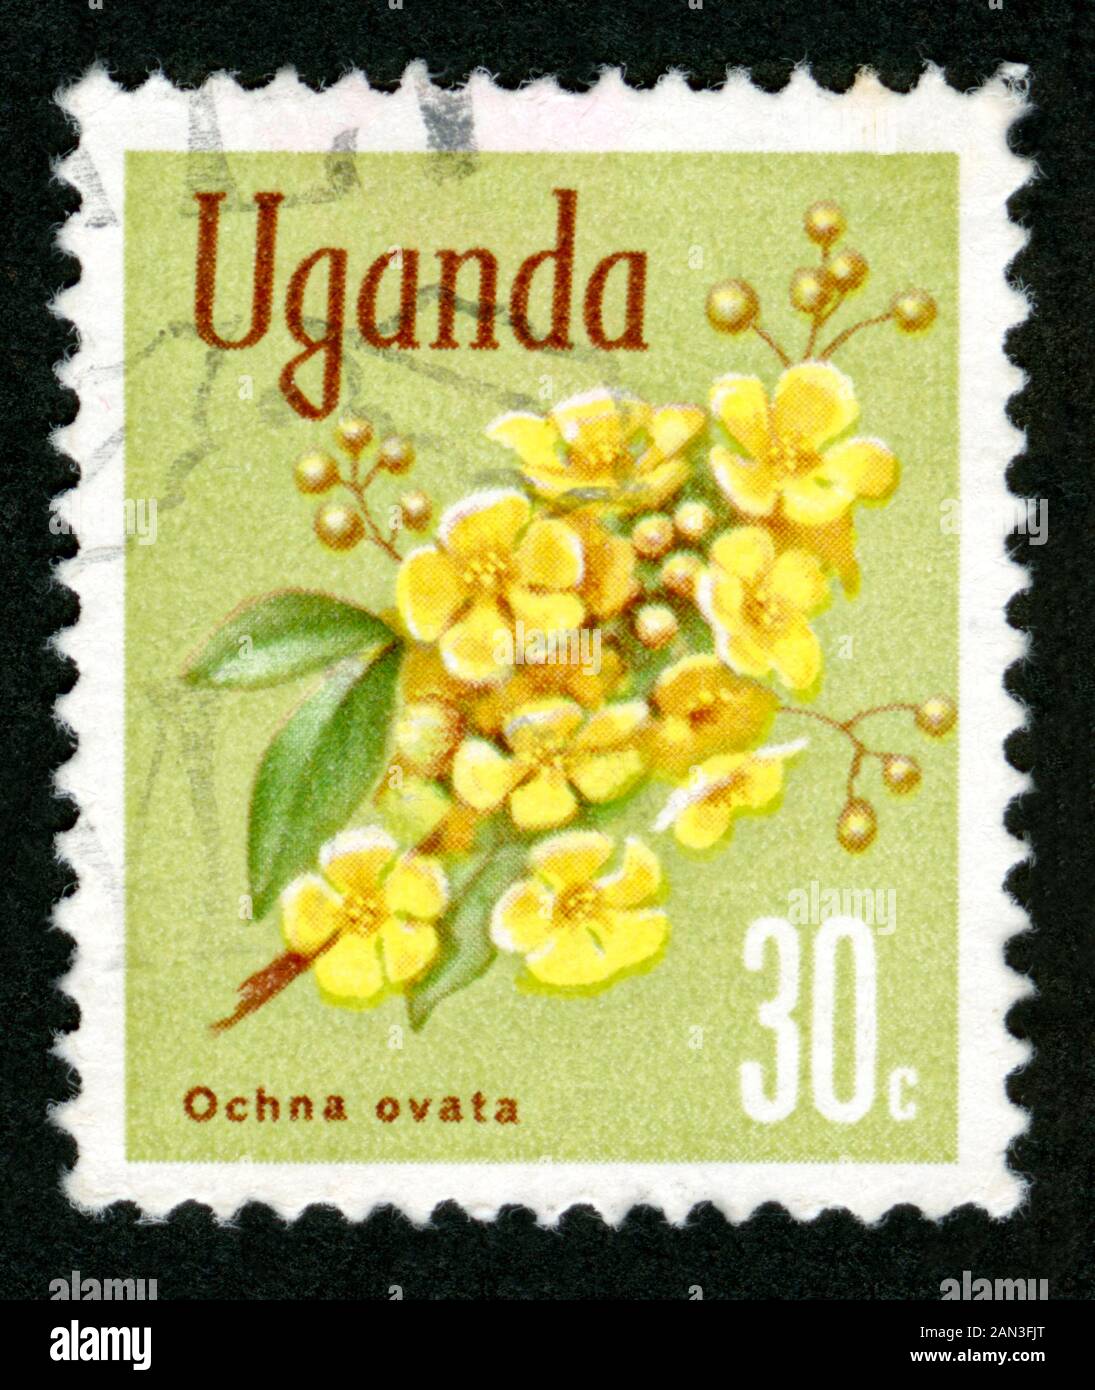 Stamp print in Uganda,flowers,Ochna ovata Stock Photo